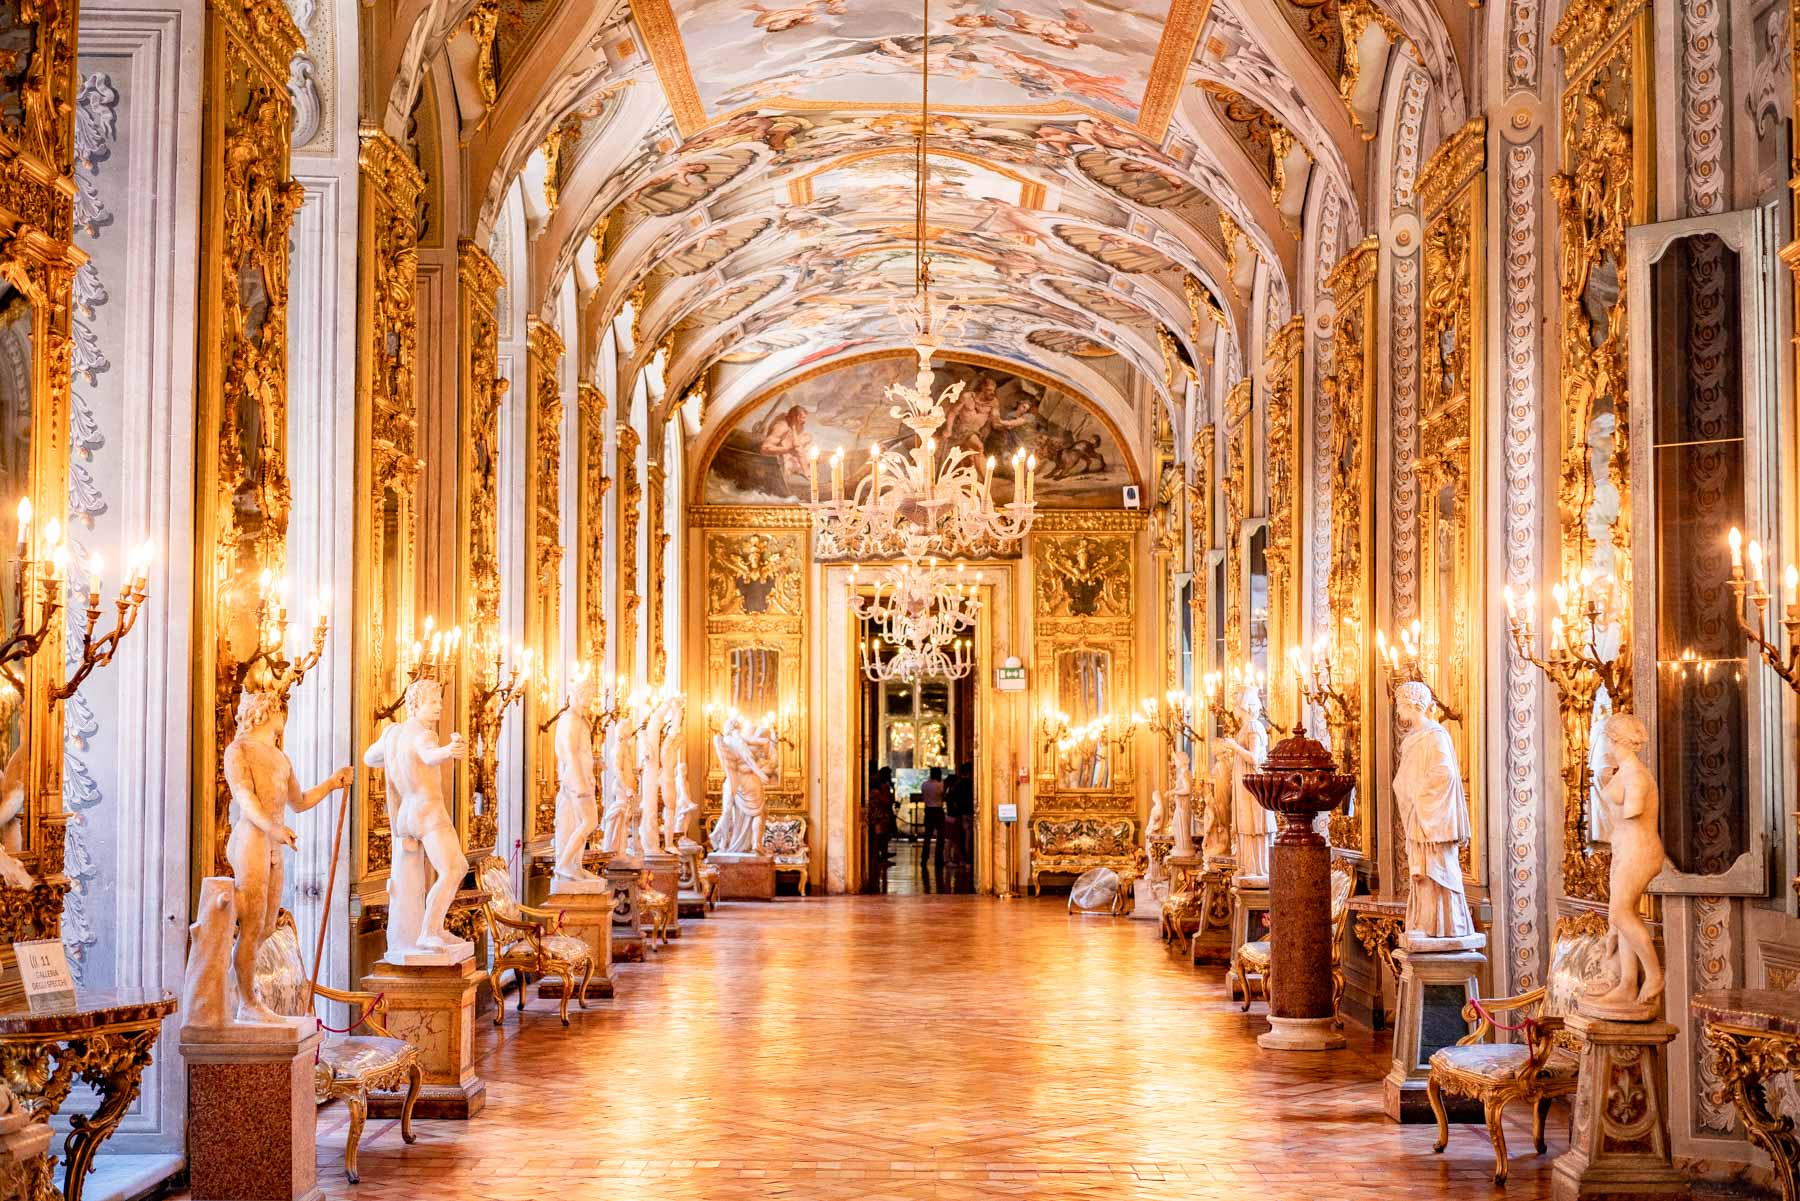 Rome best things to do
Galleria Doria Pamphilj 